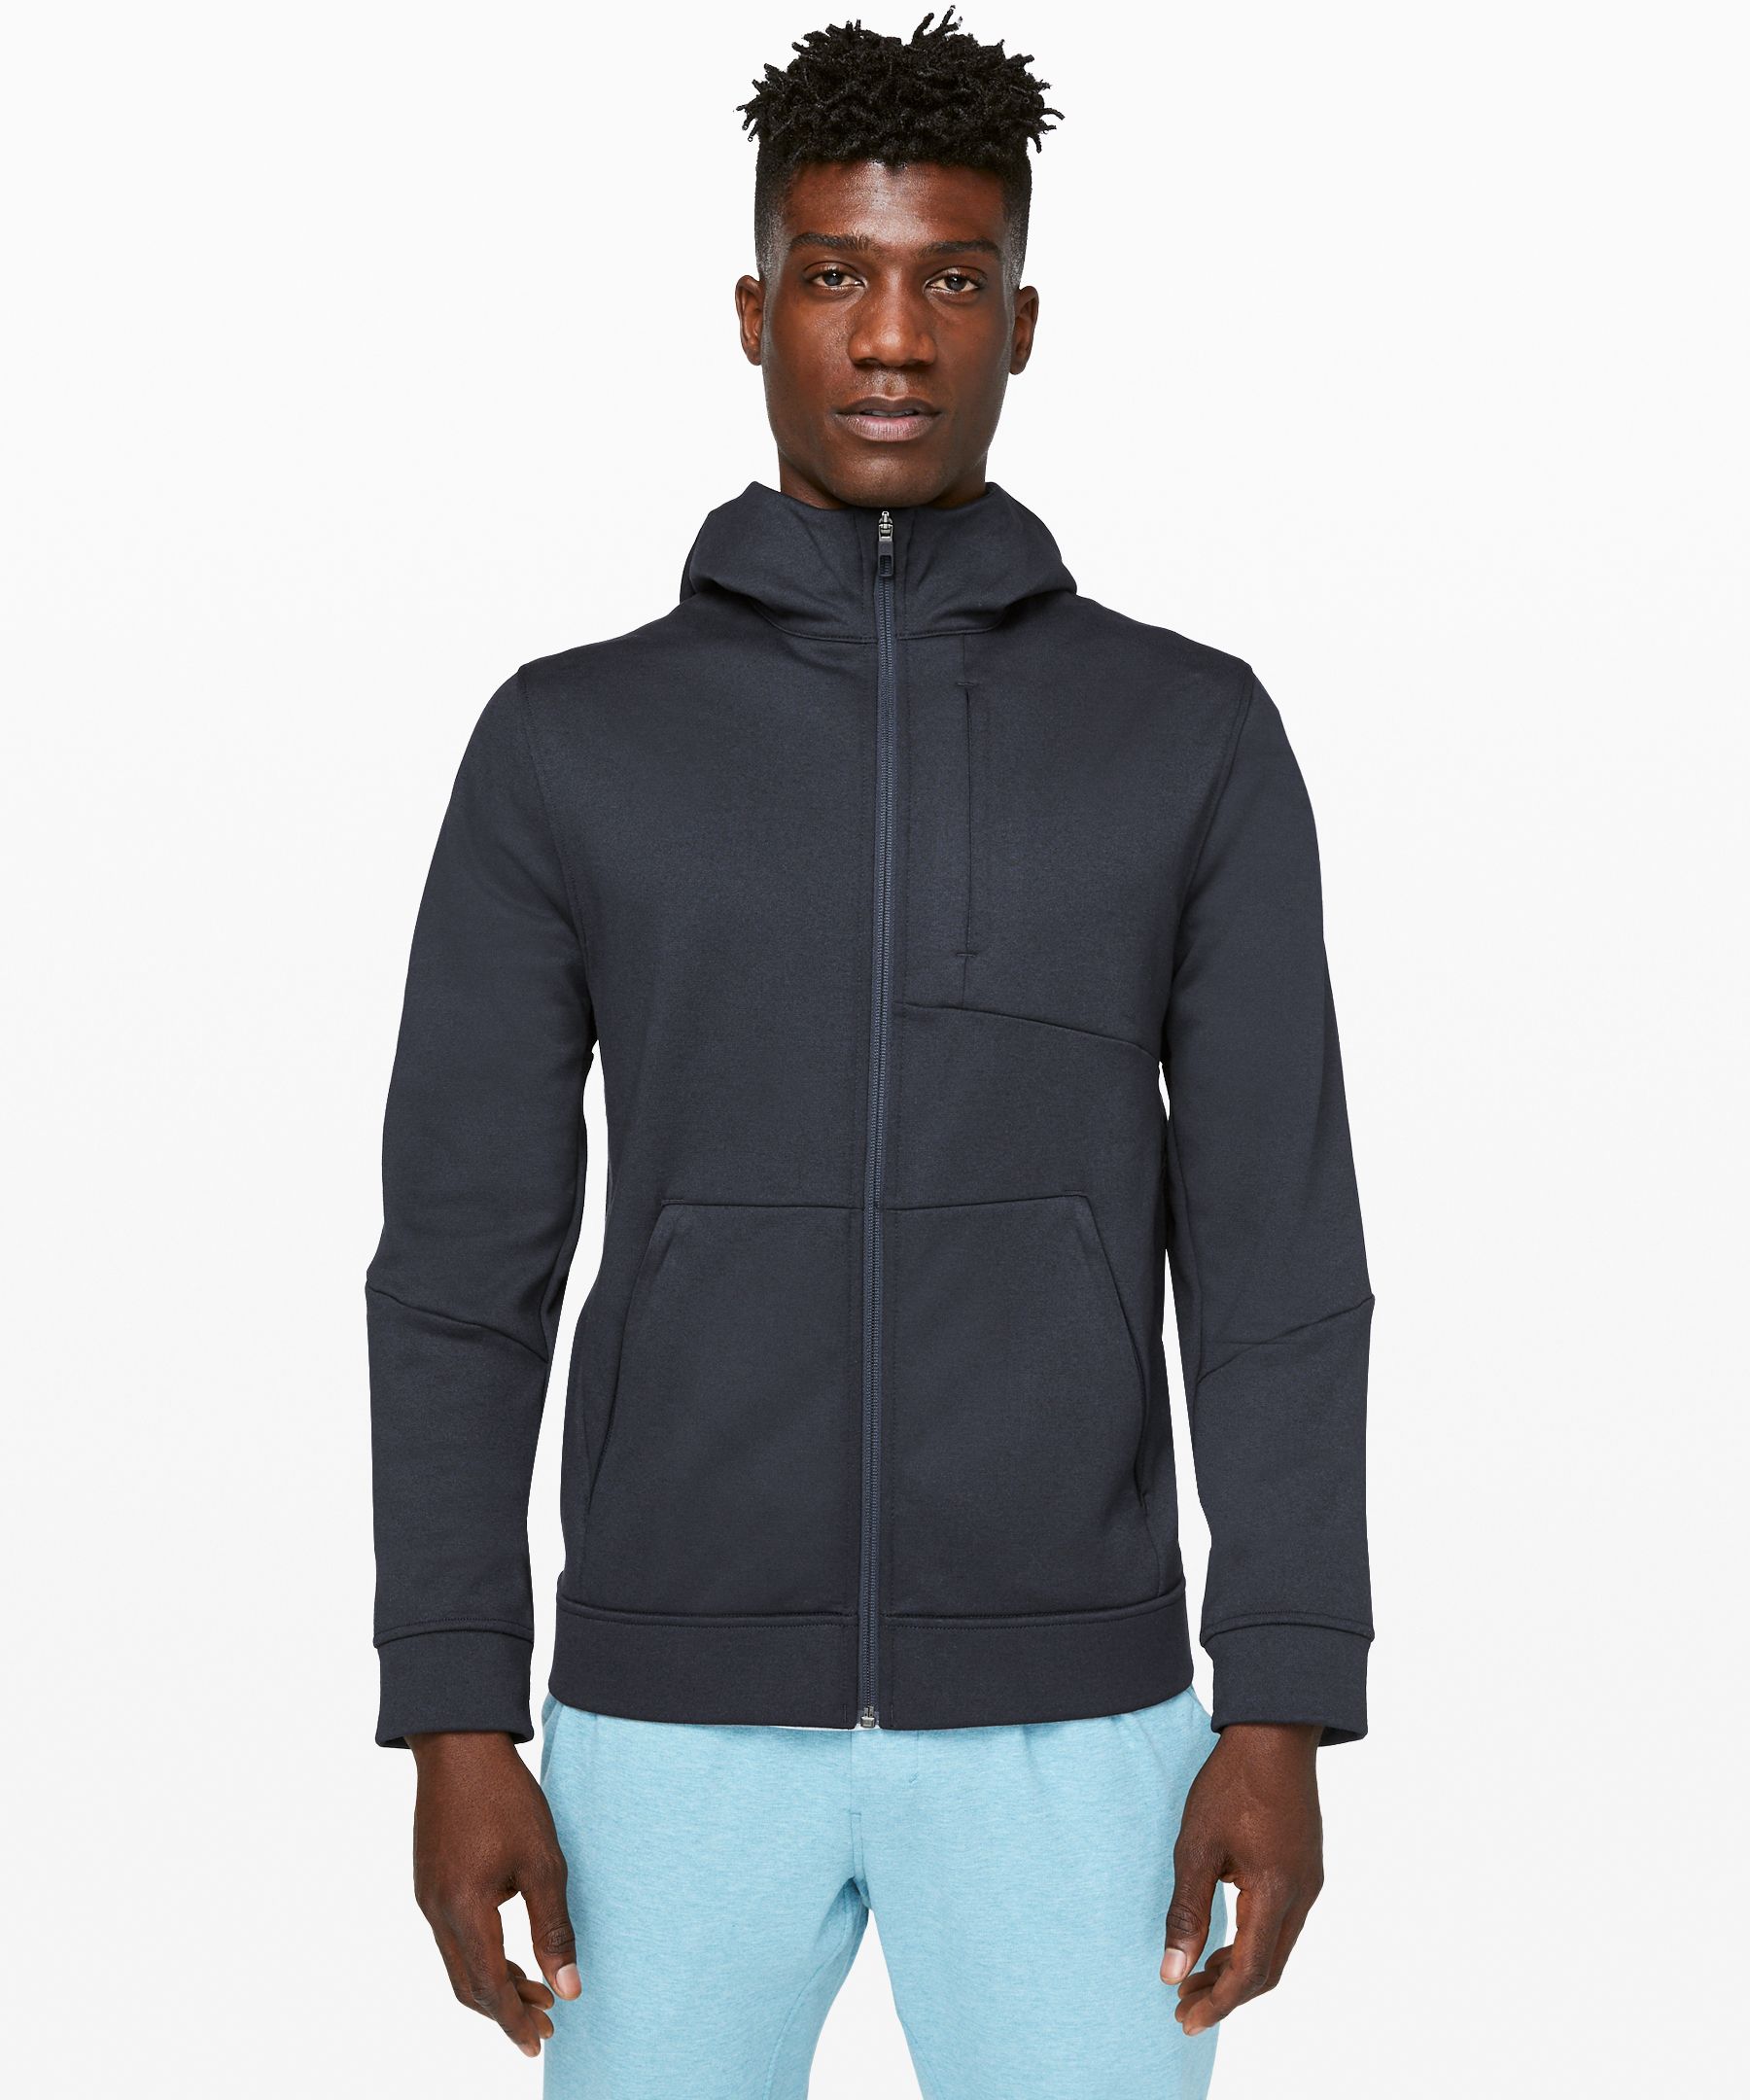 lululemon gray zip up jacket